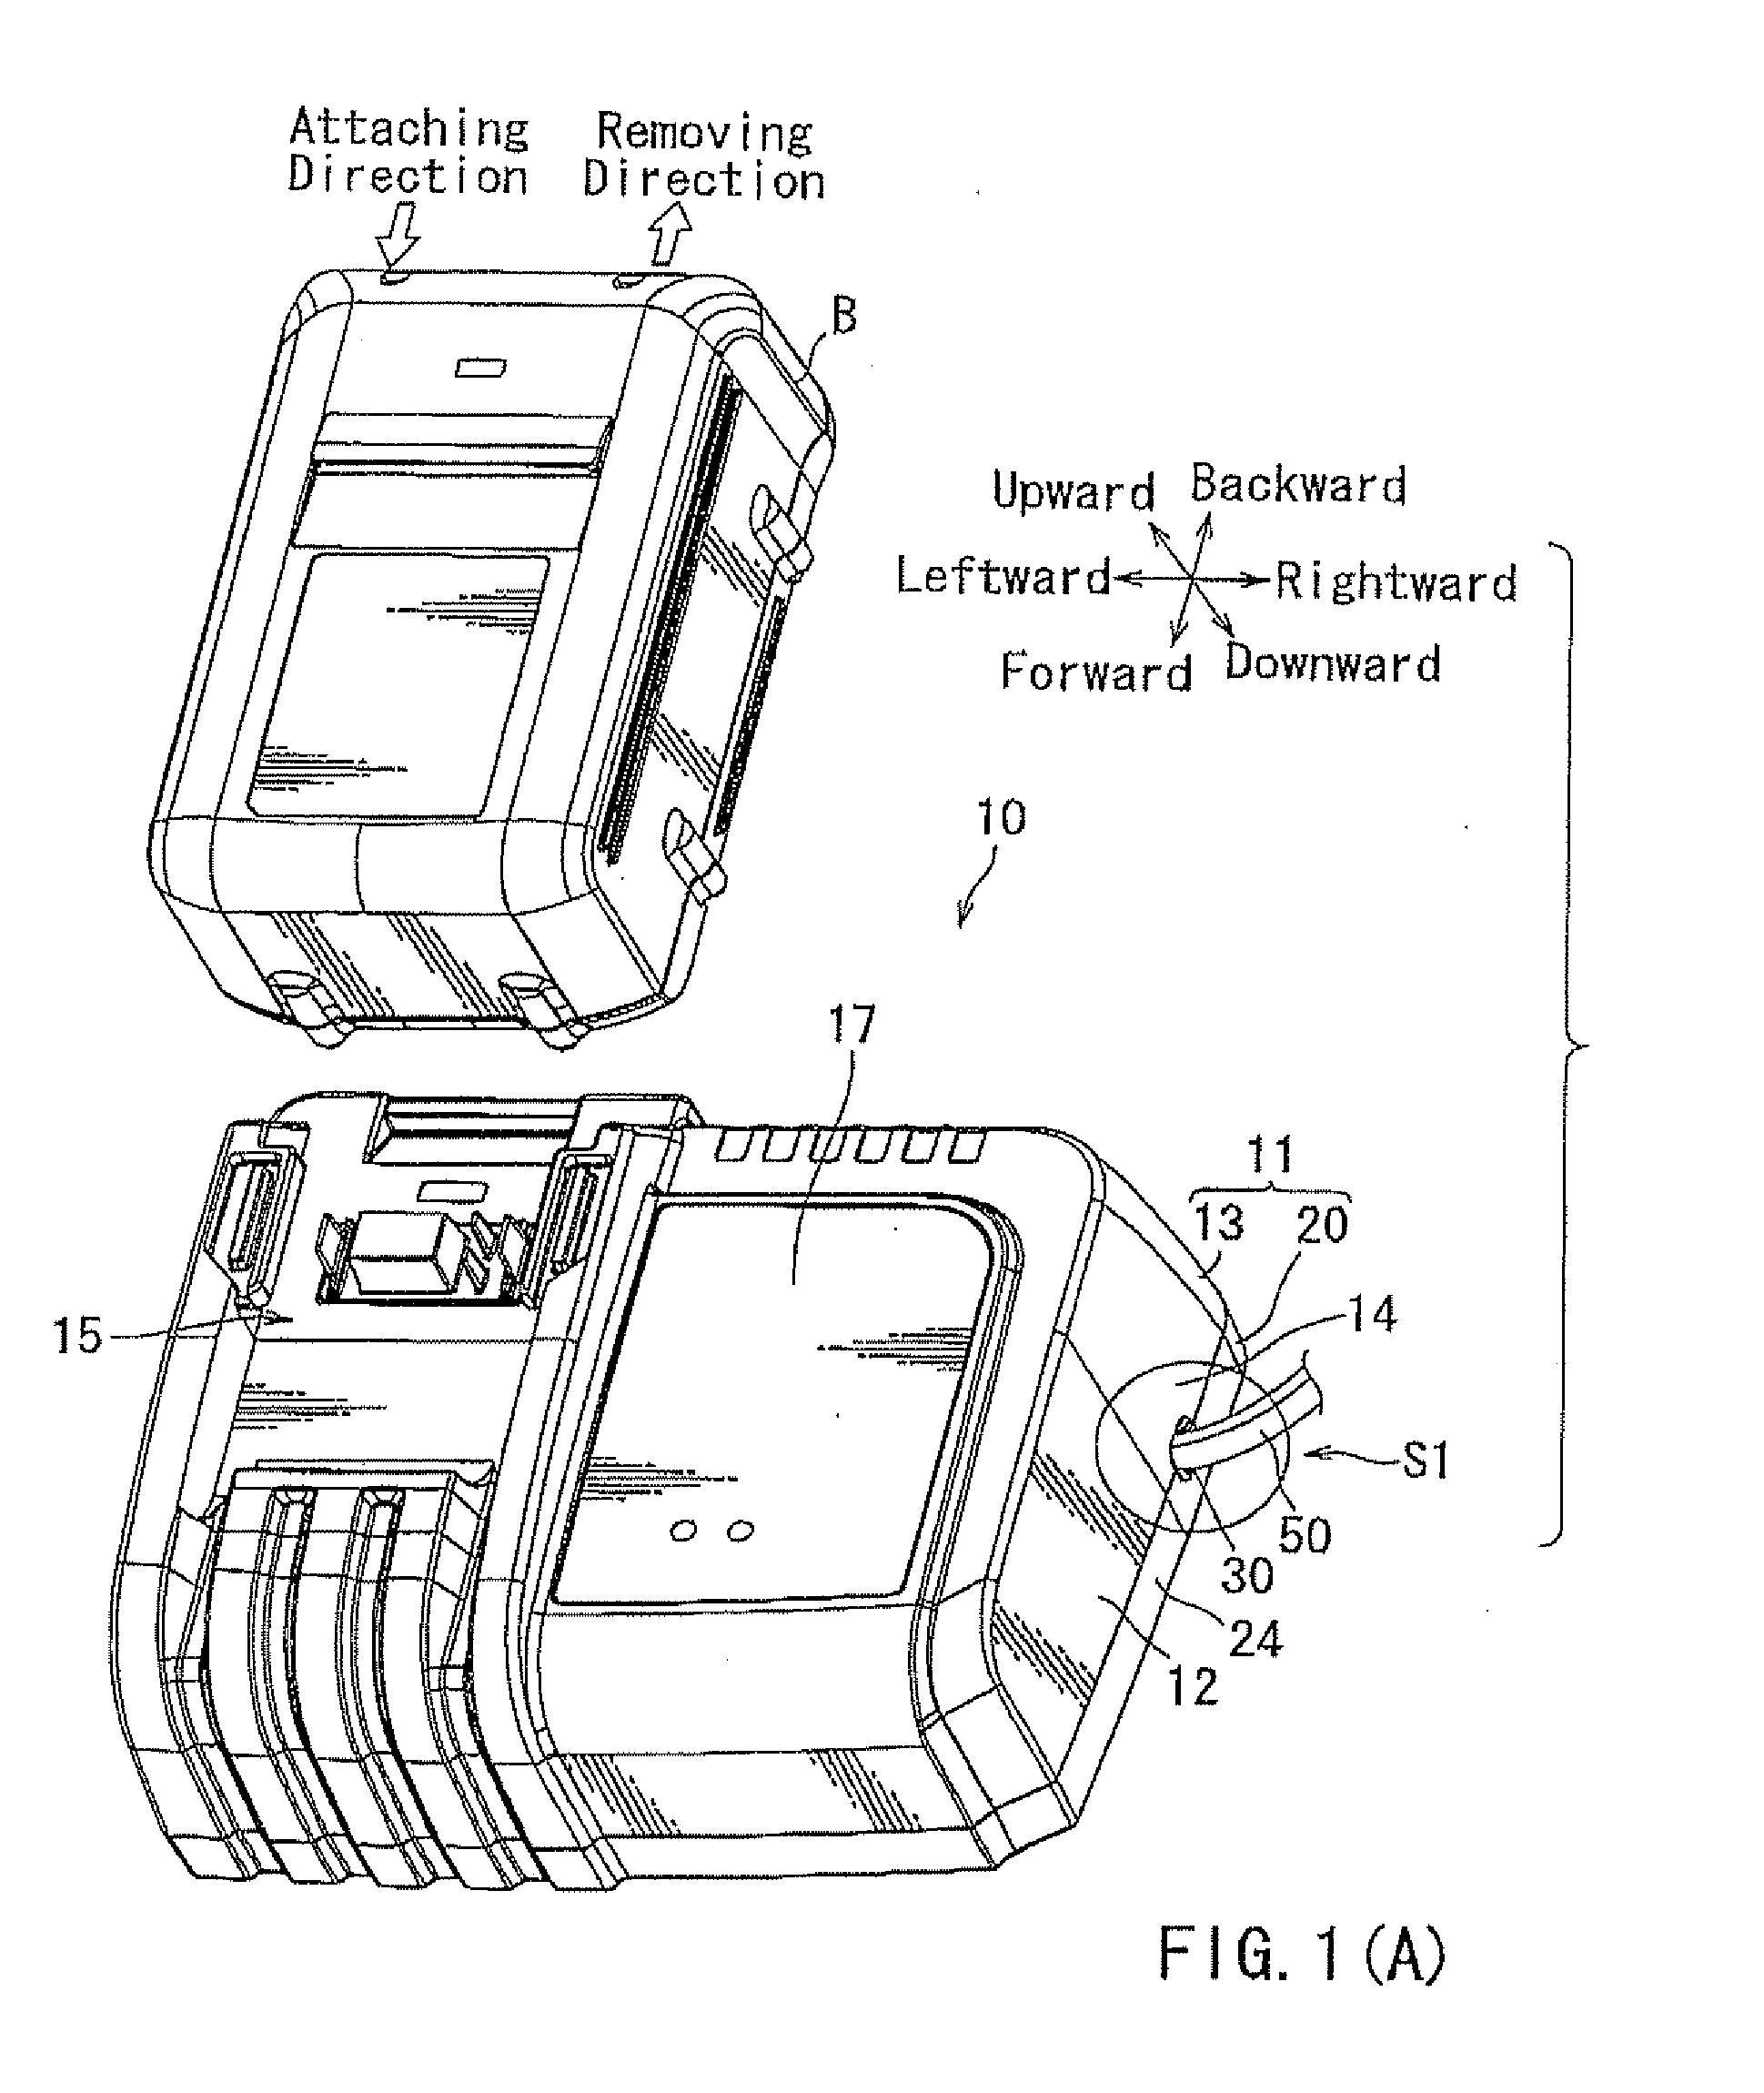 Power-supply cord arrangement structure